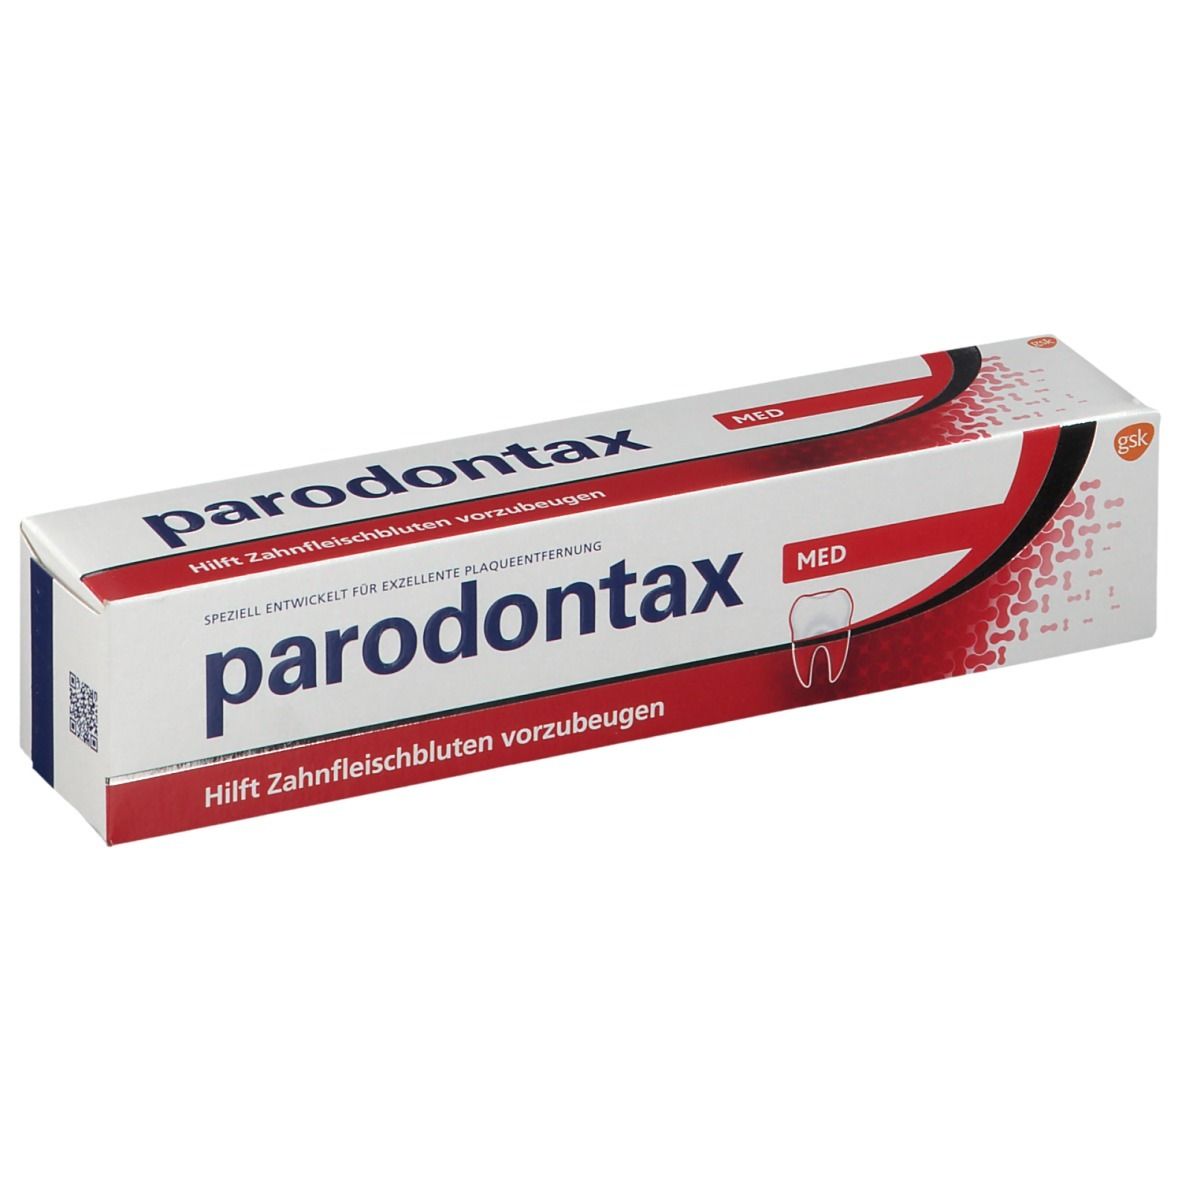 Image of parodontax Med®